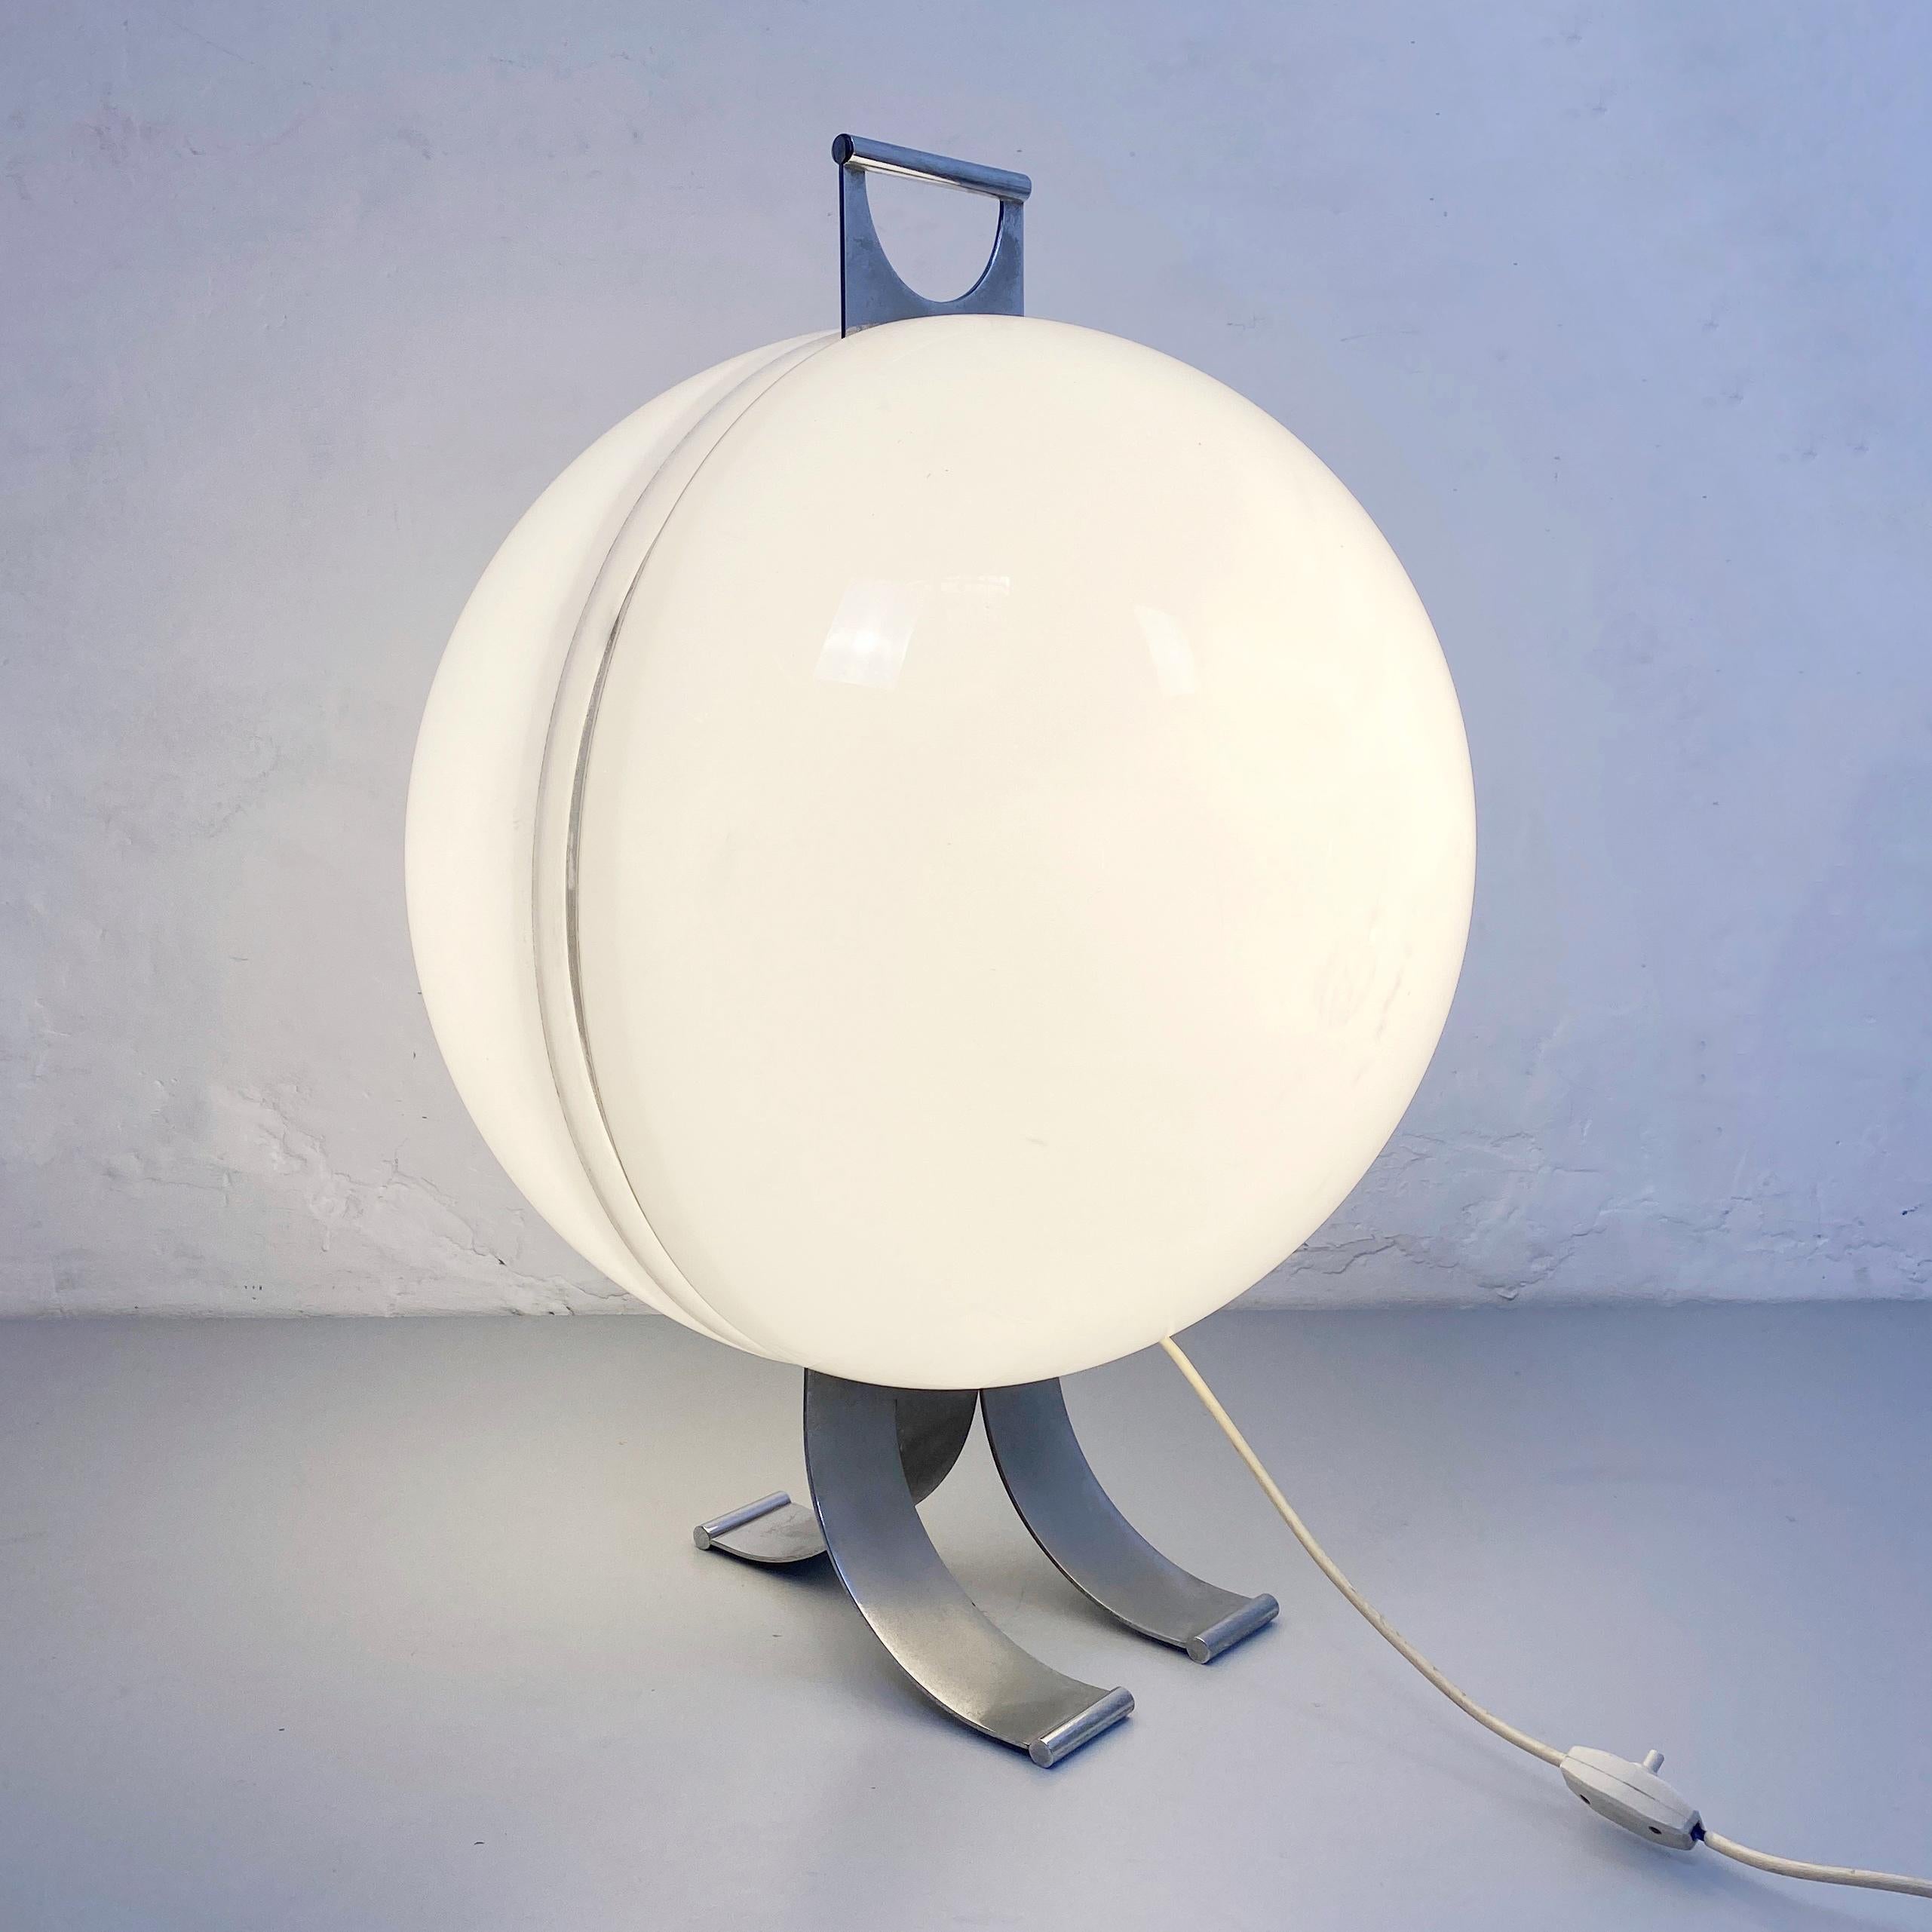 Italian Mid-Century Modern Sfera Table Lamp by Beni Cuccuru for Ecolight, 1972 For Sale 2